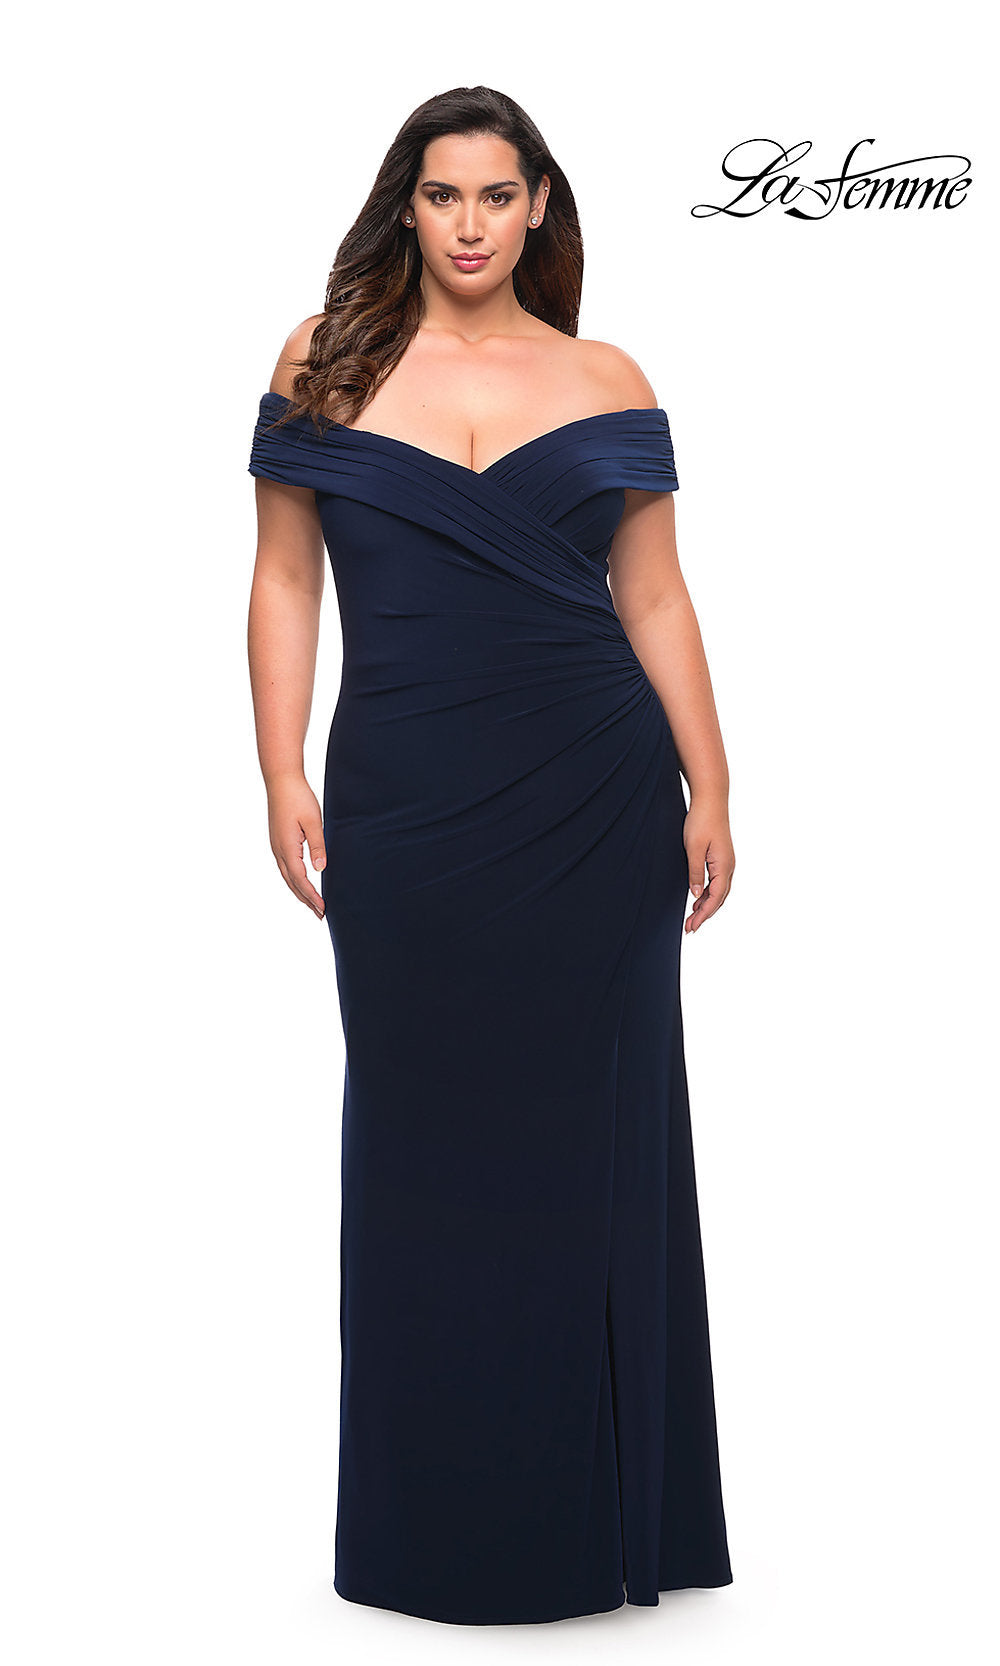  Plus-Size Navy Blue Long Prom Dress by La Femme